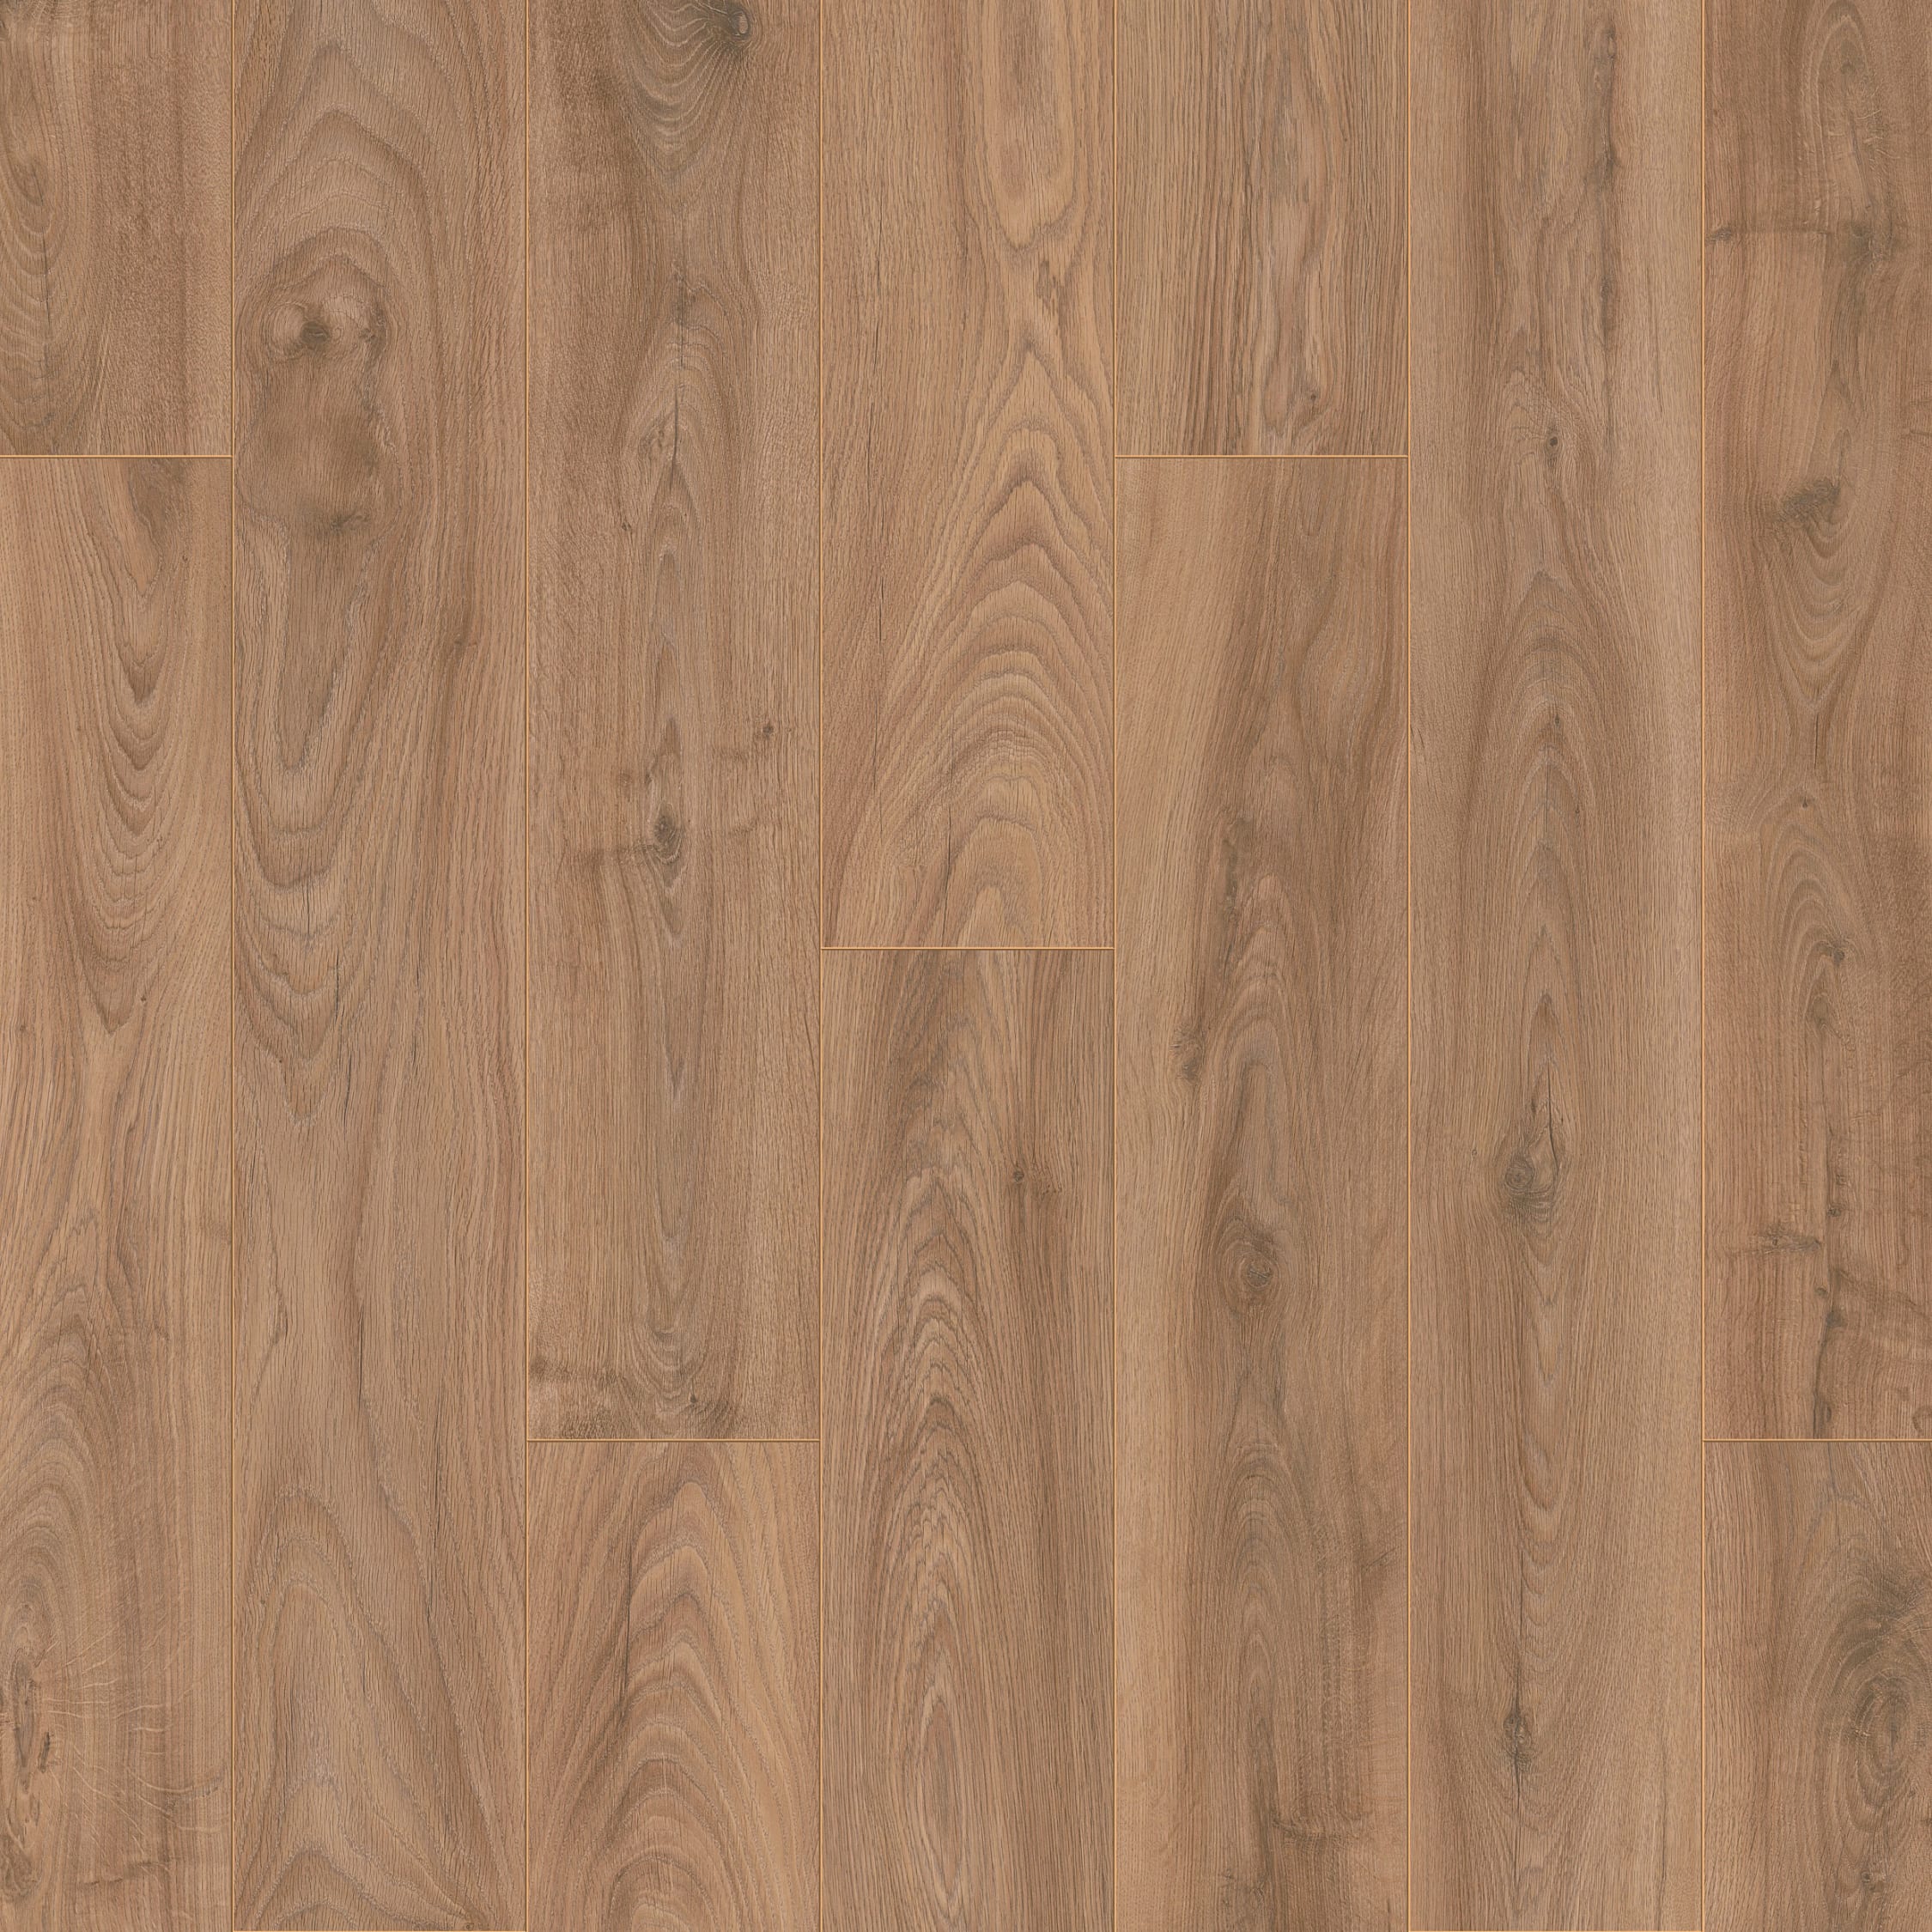 hjemmehørende belønning pølse Windsor Light Oak 8mm Laminate Flooring - 2.22m2 | Wickes.co.uk